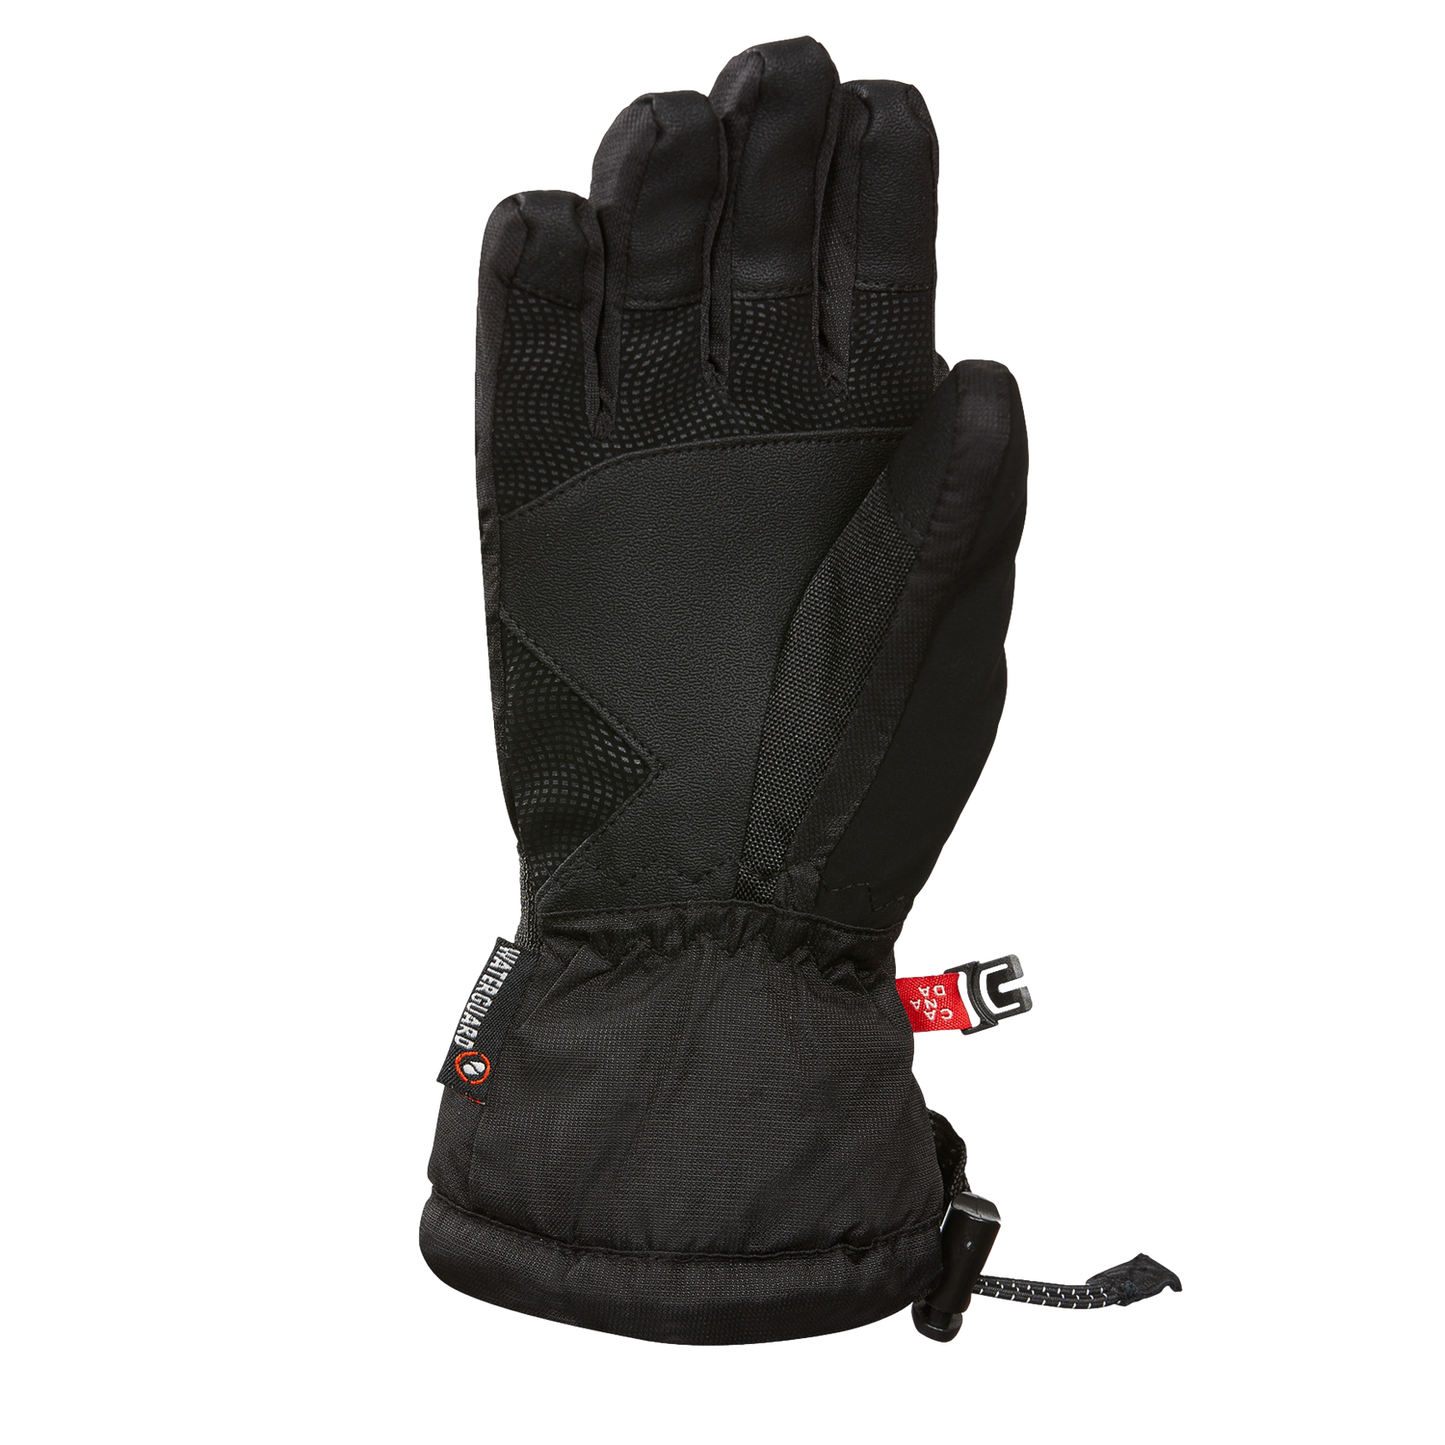 Winter gloves - Kombi